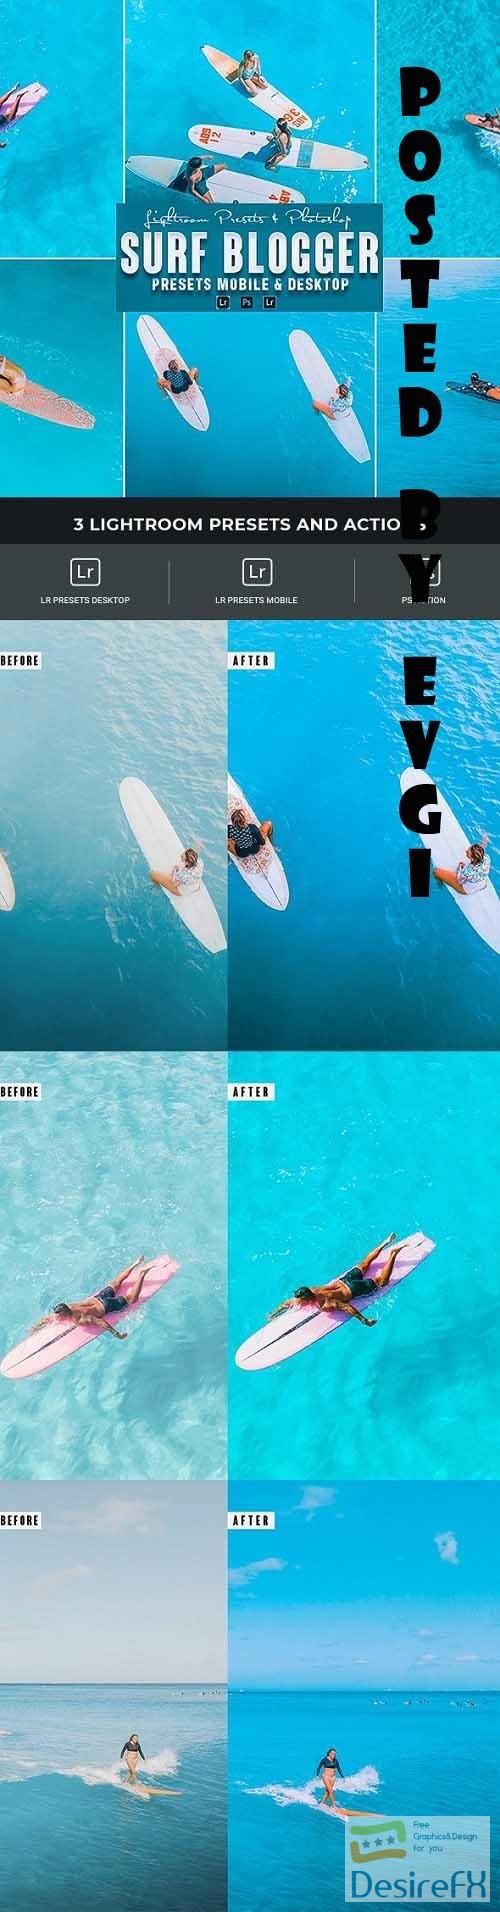 Surf Photoshop Action &amp; Lightrom Presets - 34742132